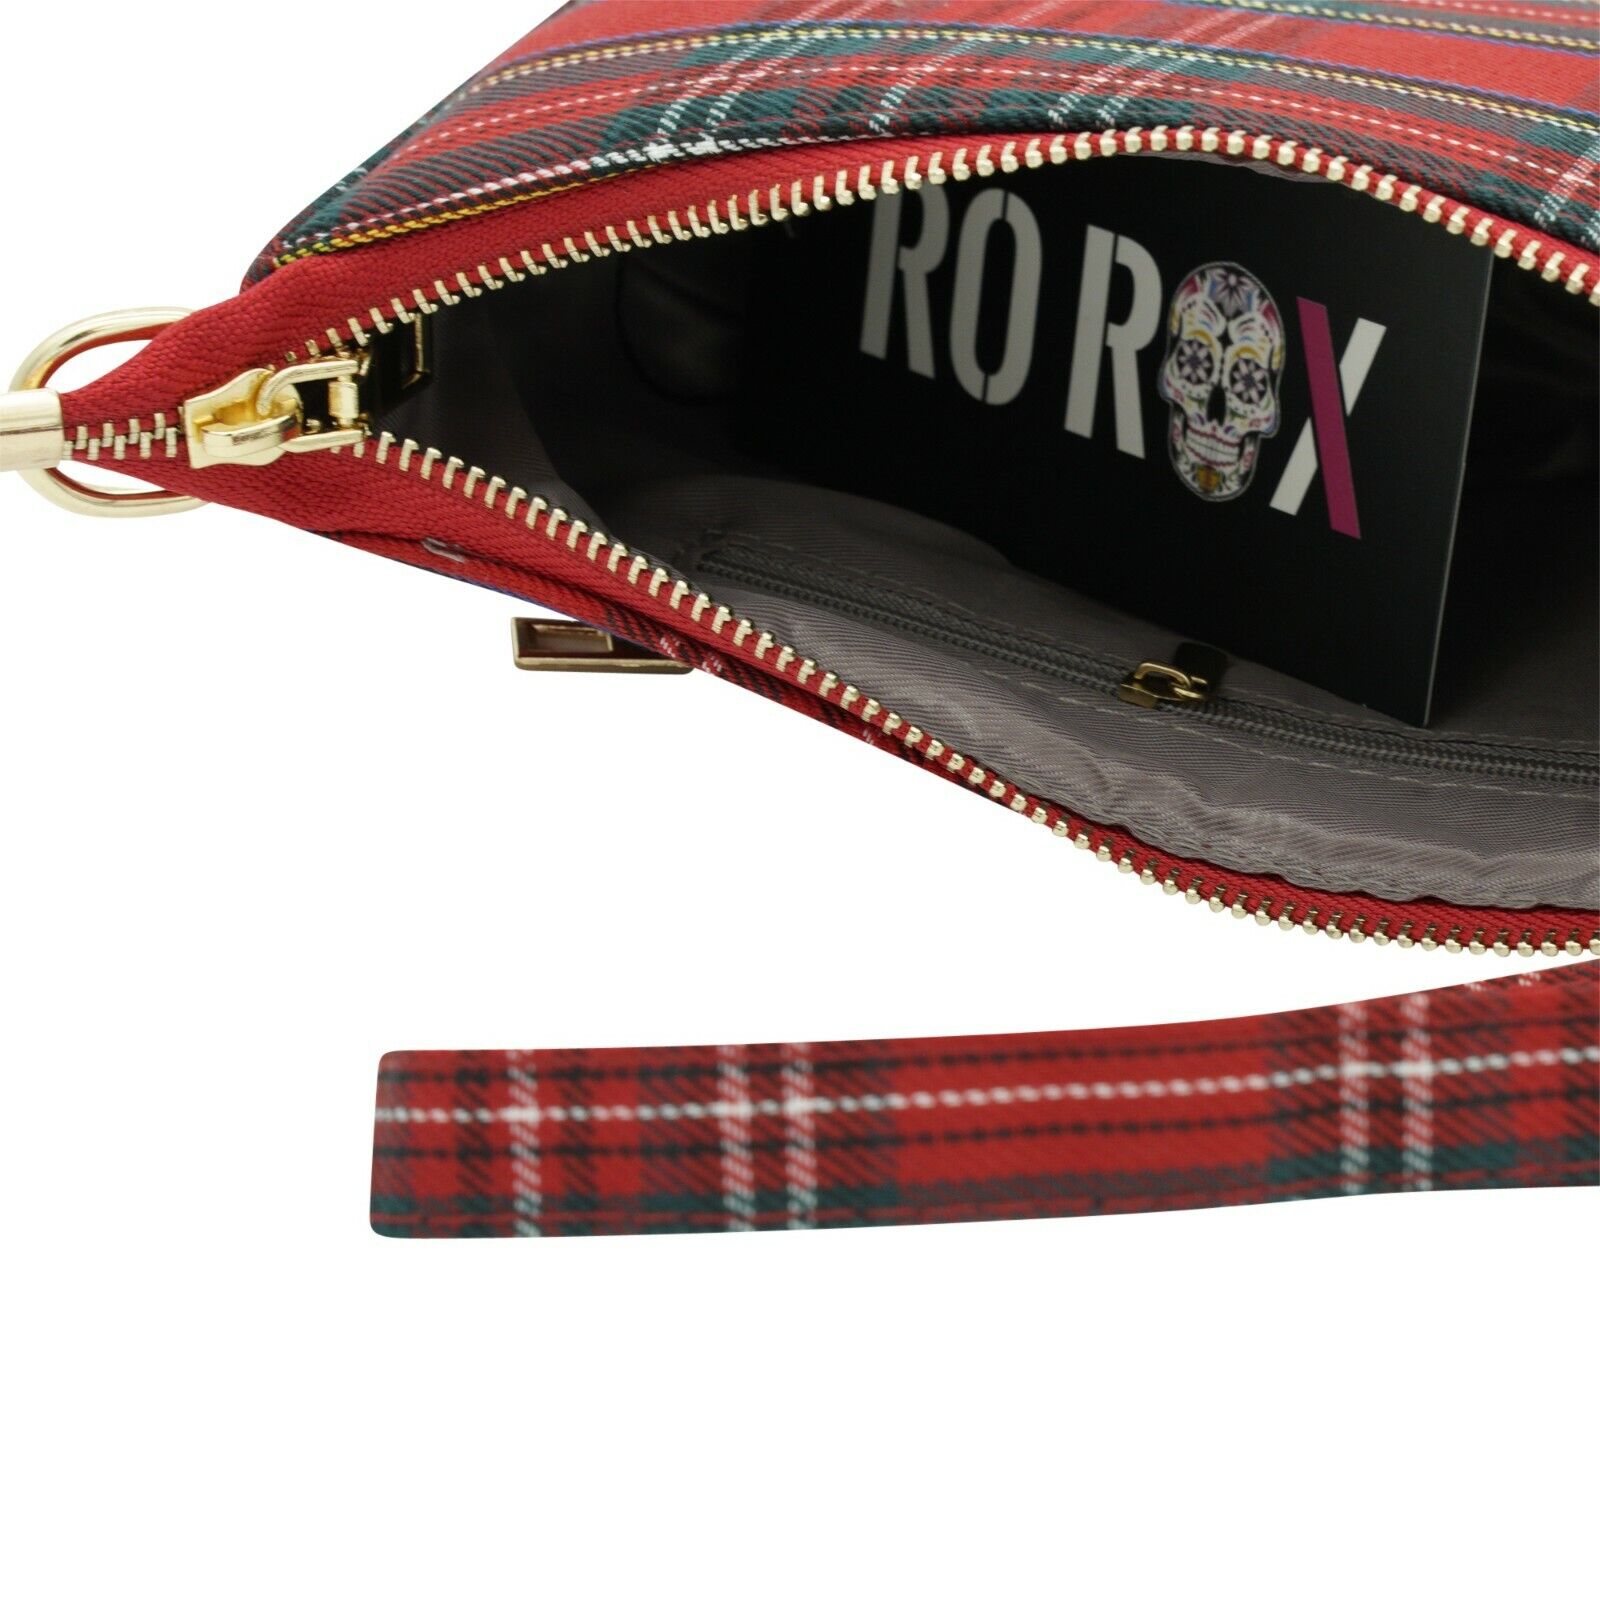 Ro Rox Sheena Crossbody Handbag Tartan Check Punk Grunge 90's Style